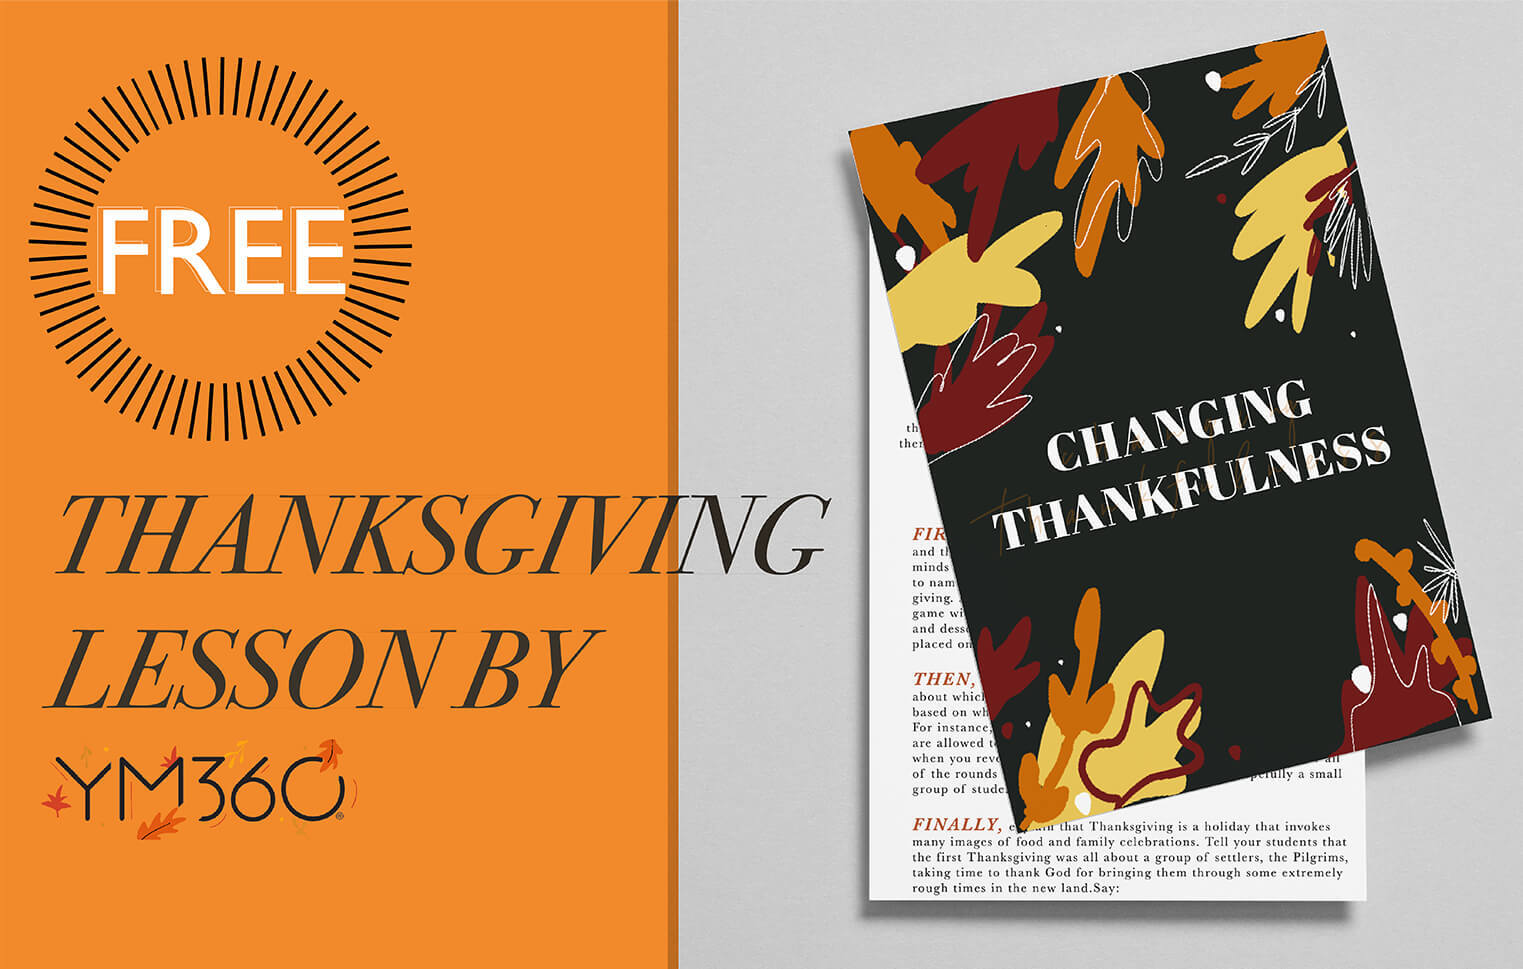 Free Thanksgiving Lesson | Changing Thankfulness